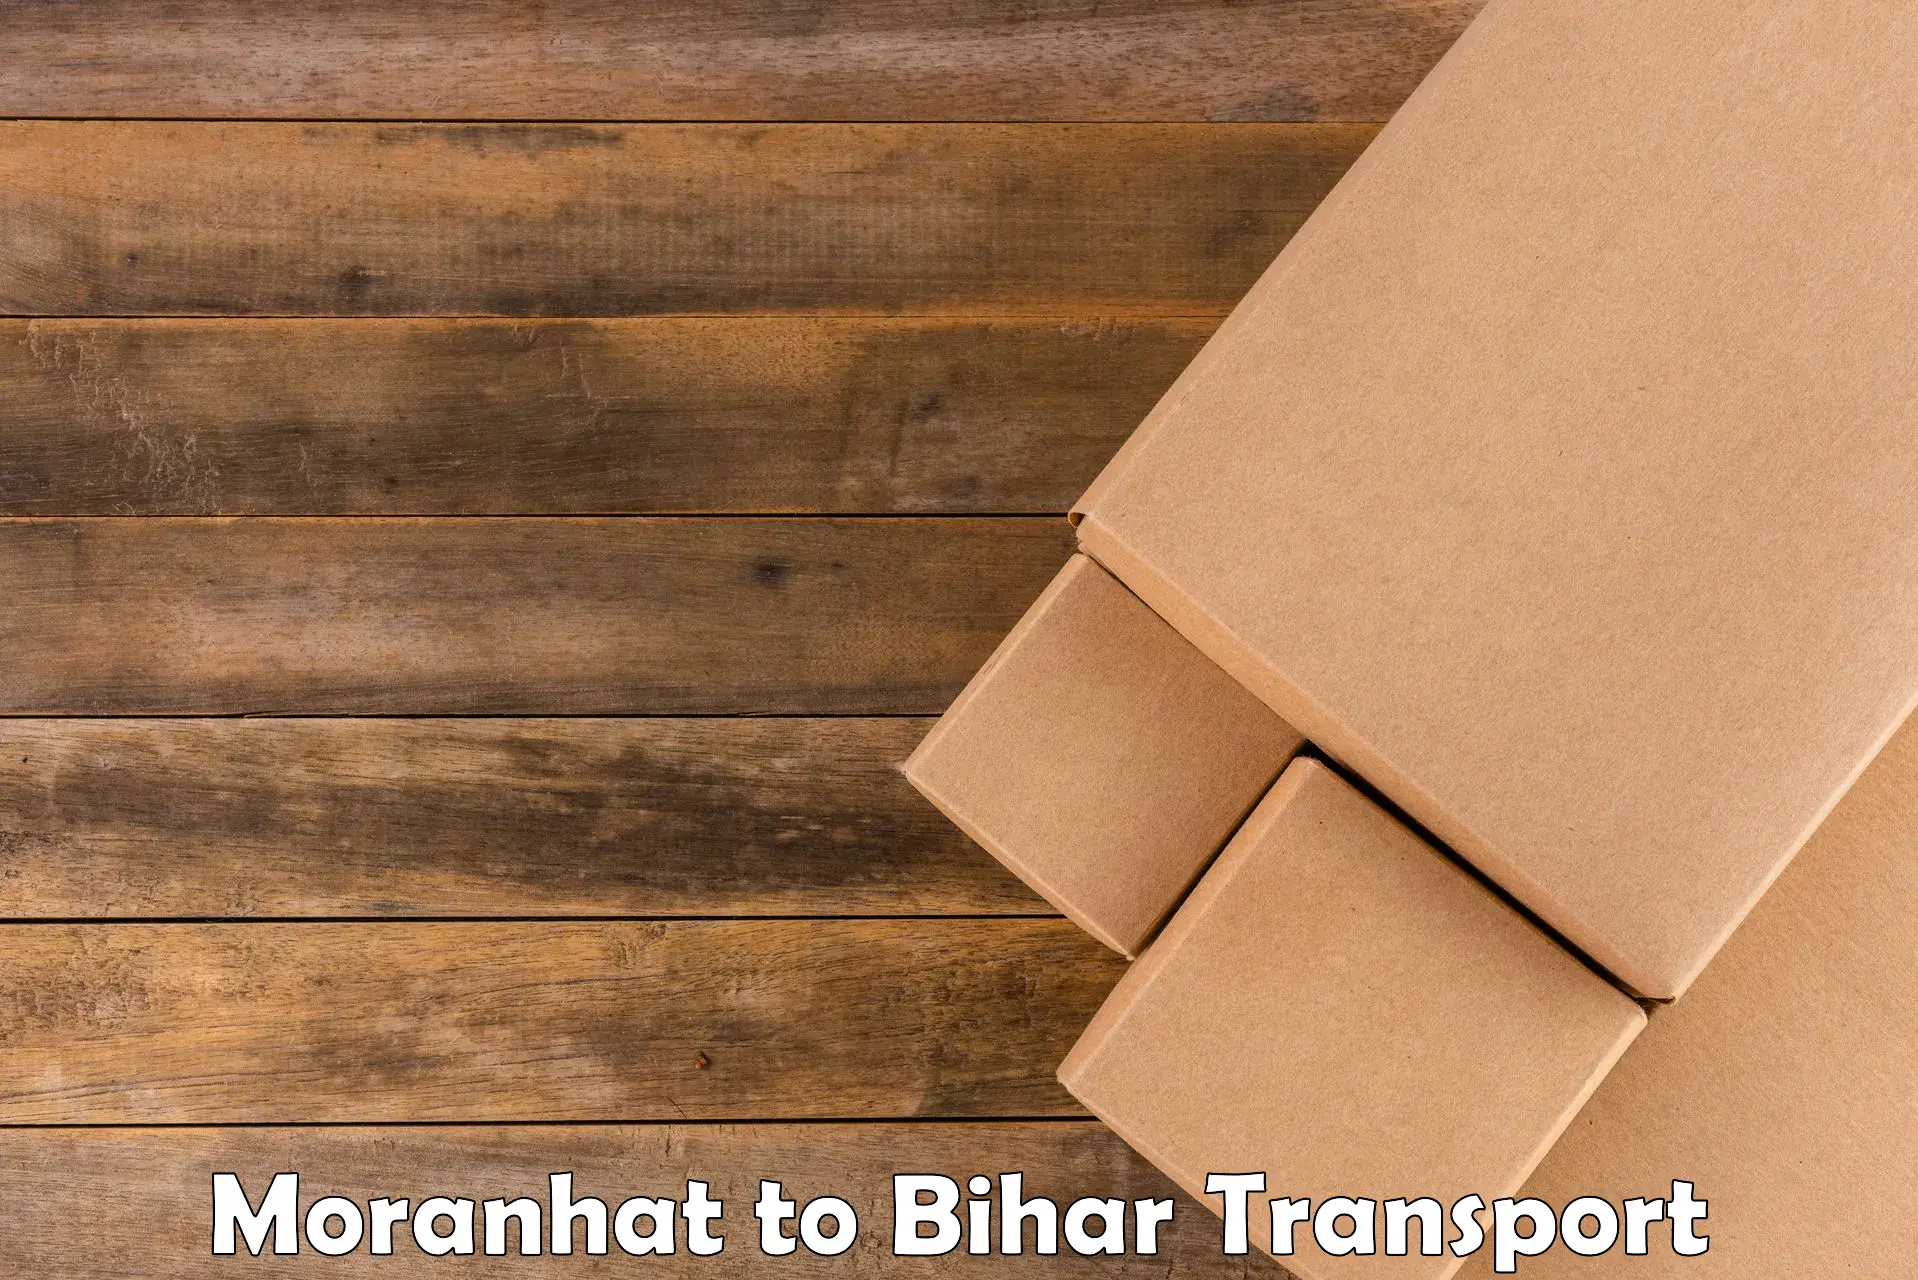 Truck transport companies in India Moranhat to Gopalganj